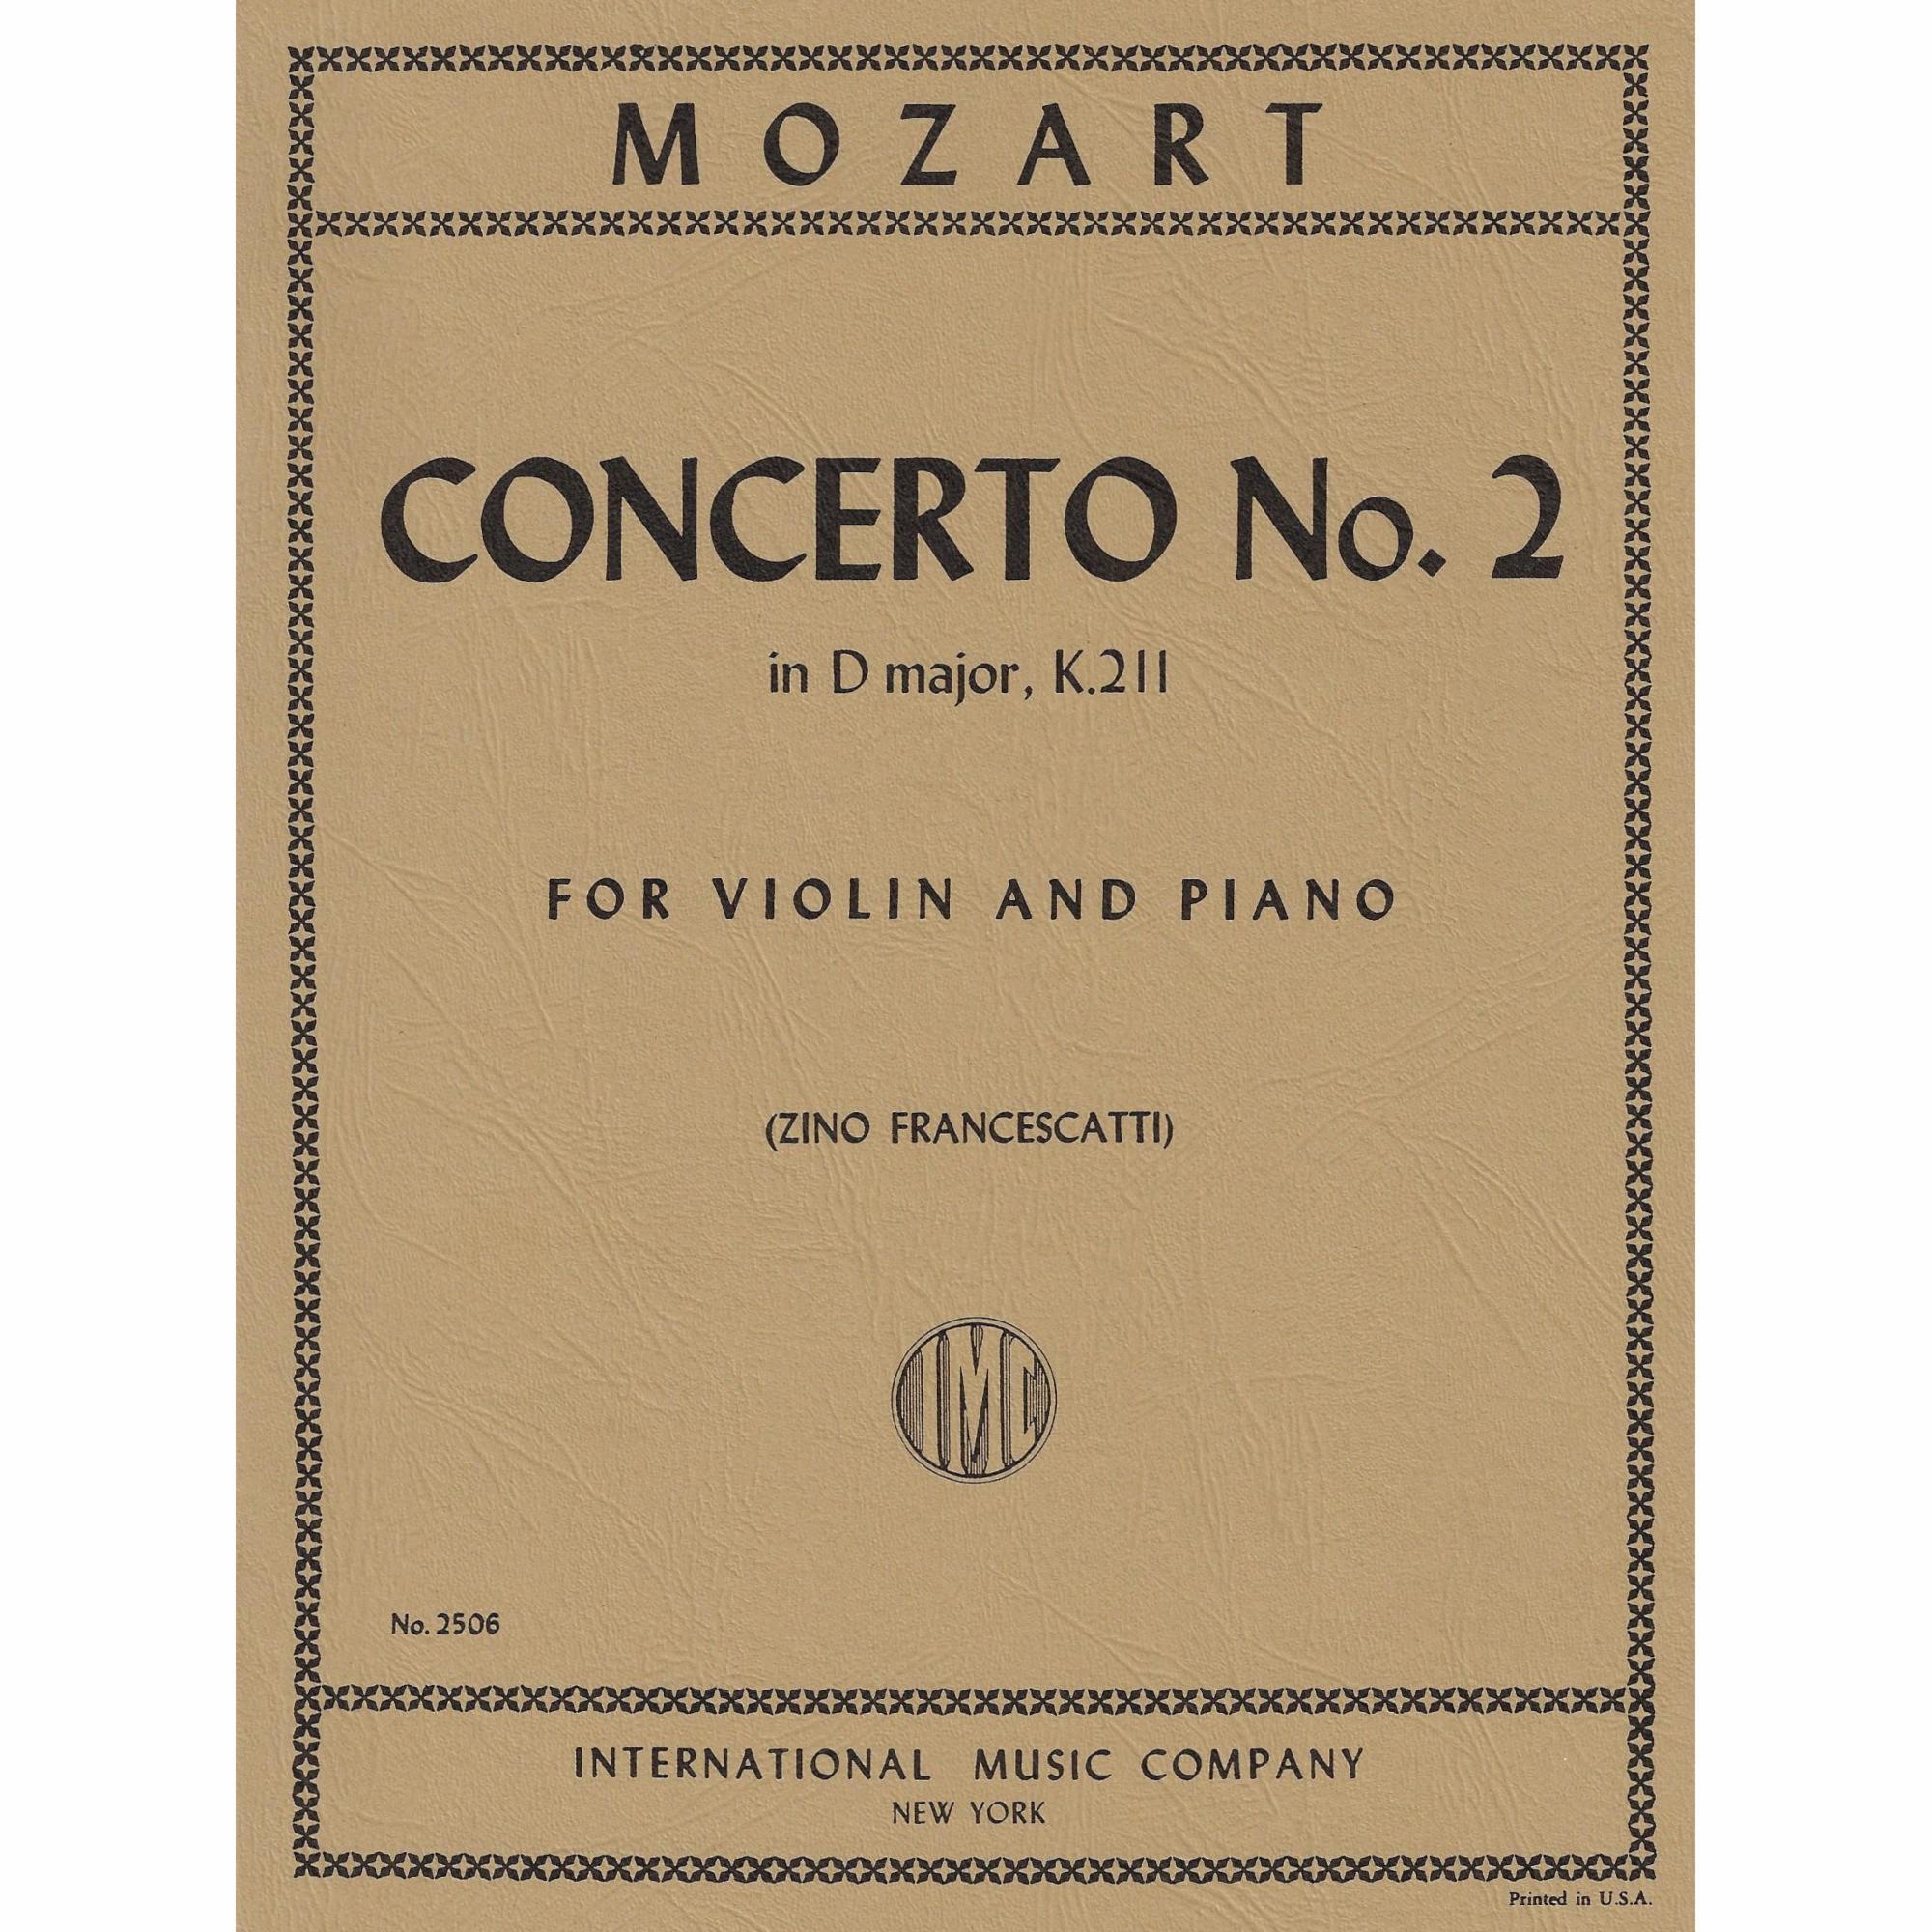 Mozart -- Concerto No. 2 in D Major, K. 211 for Violin and Piano